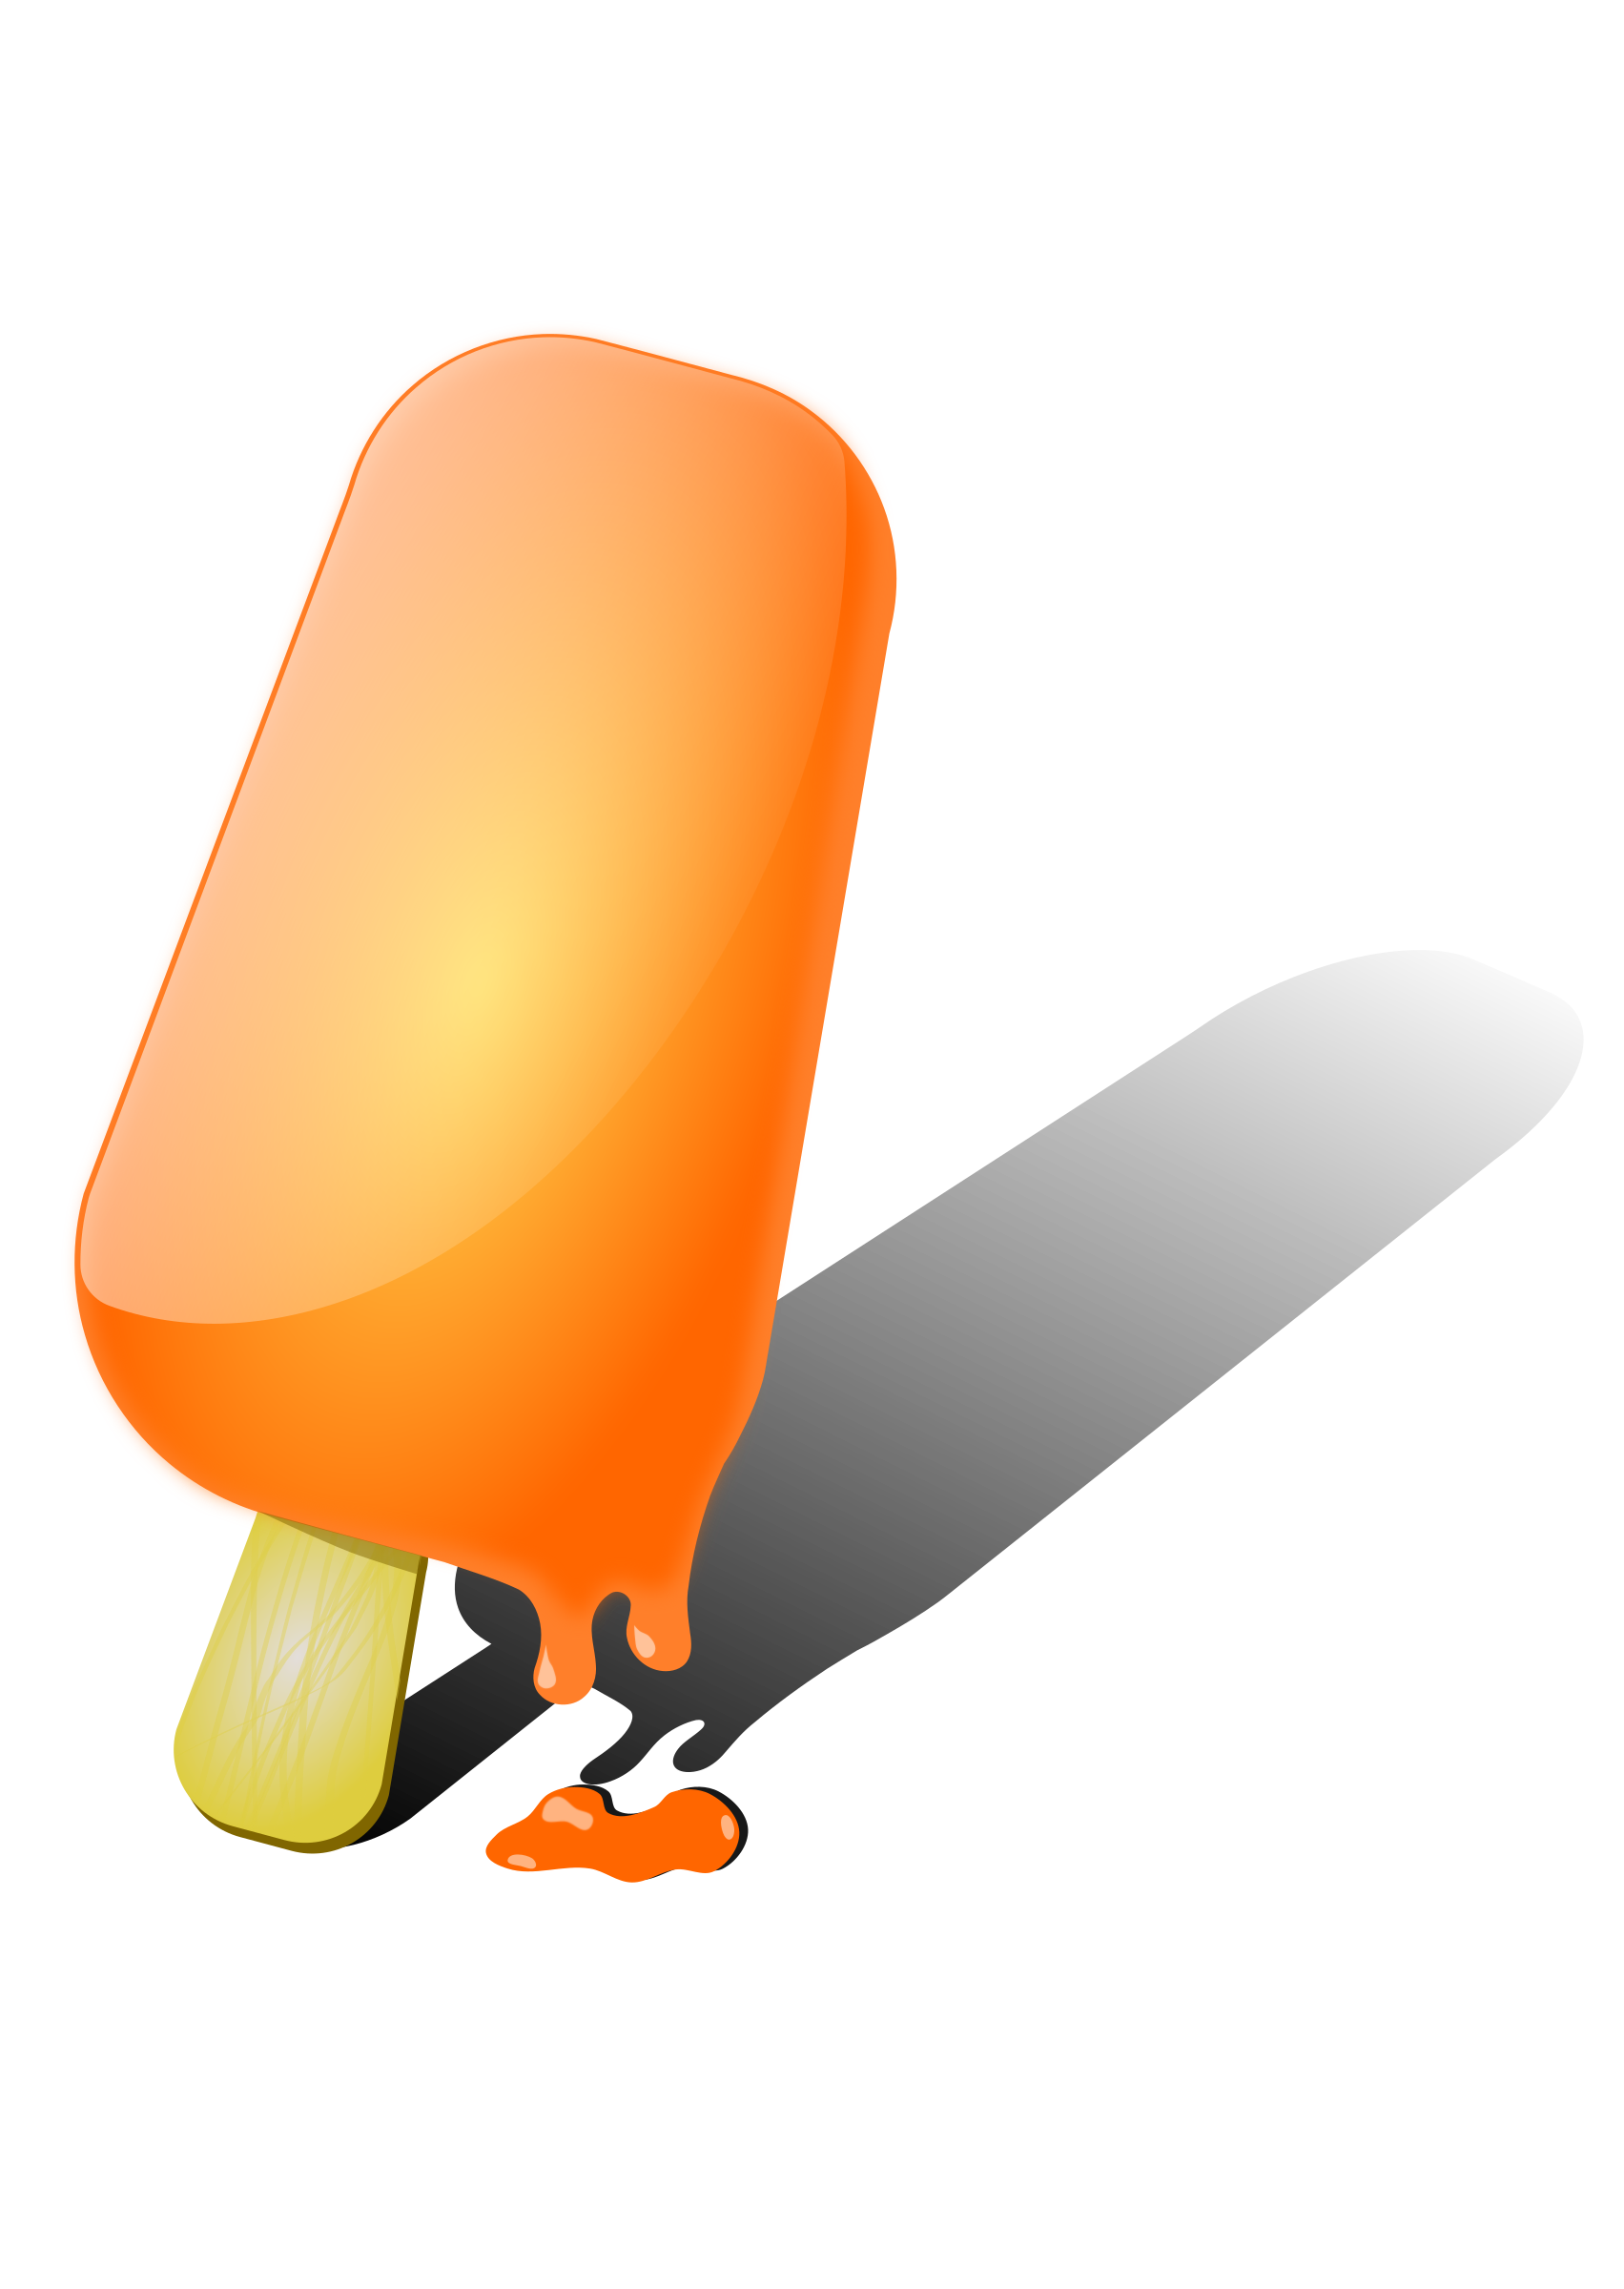 Orange ice SVG Clip arts